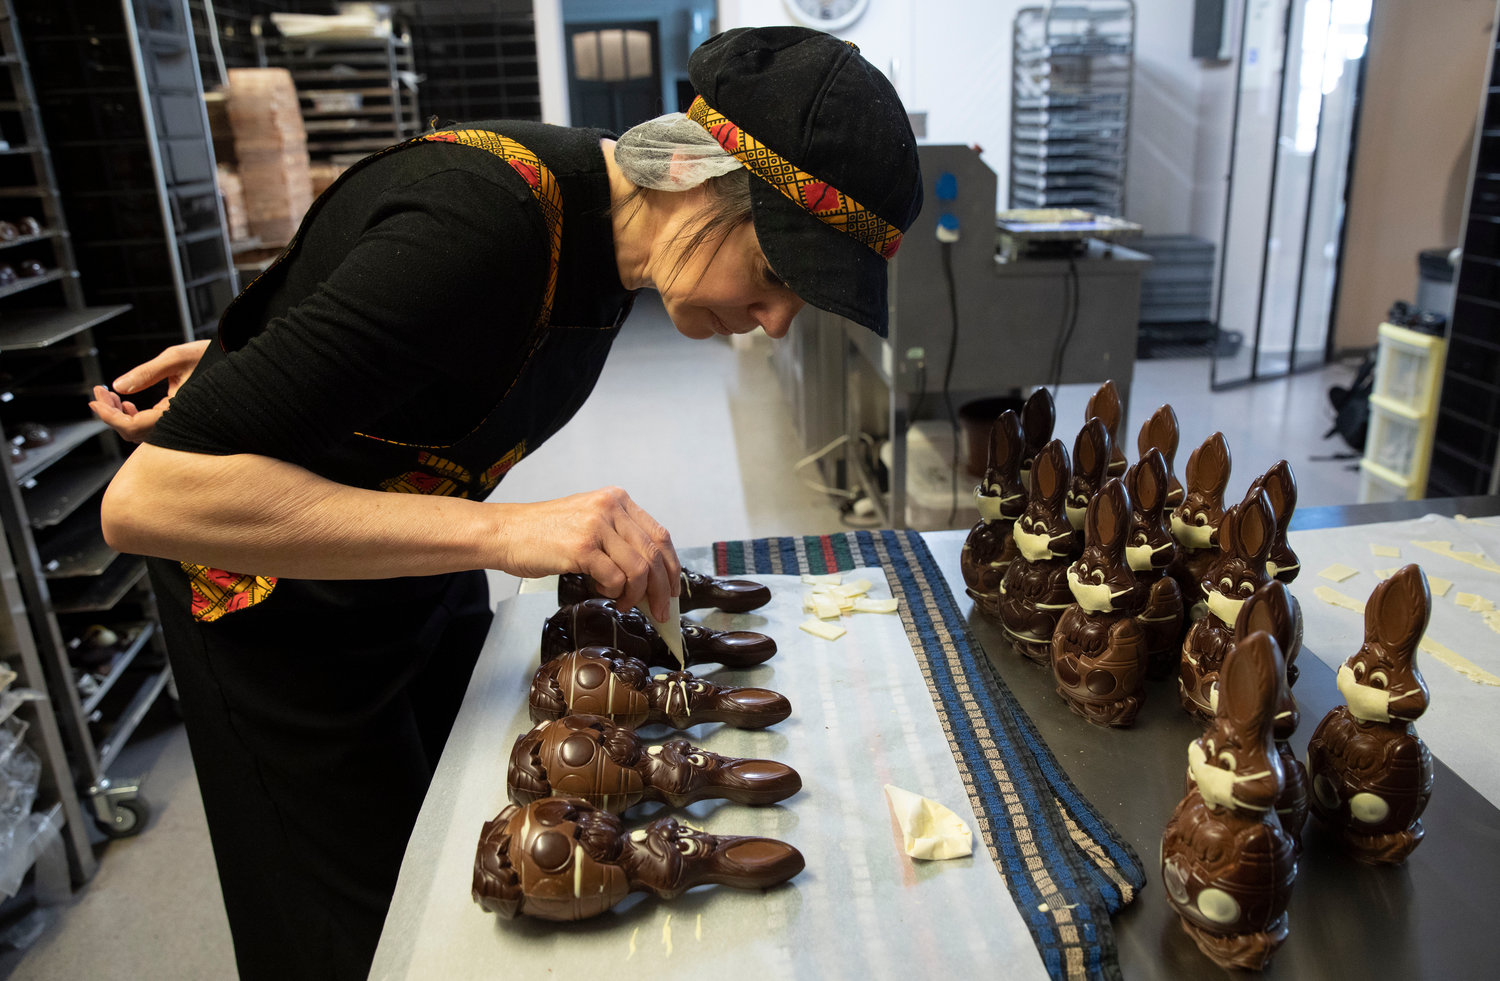 DECORATING — Genevieve Trepant decorates chocolate rabbits at her shop, Cocoatree, in Lonzee, Belgium.